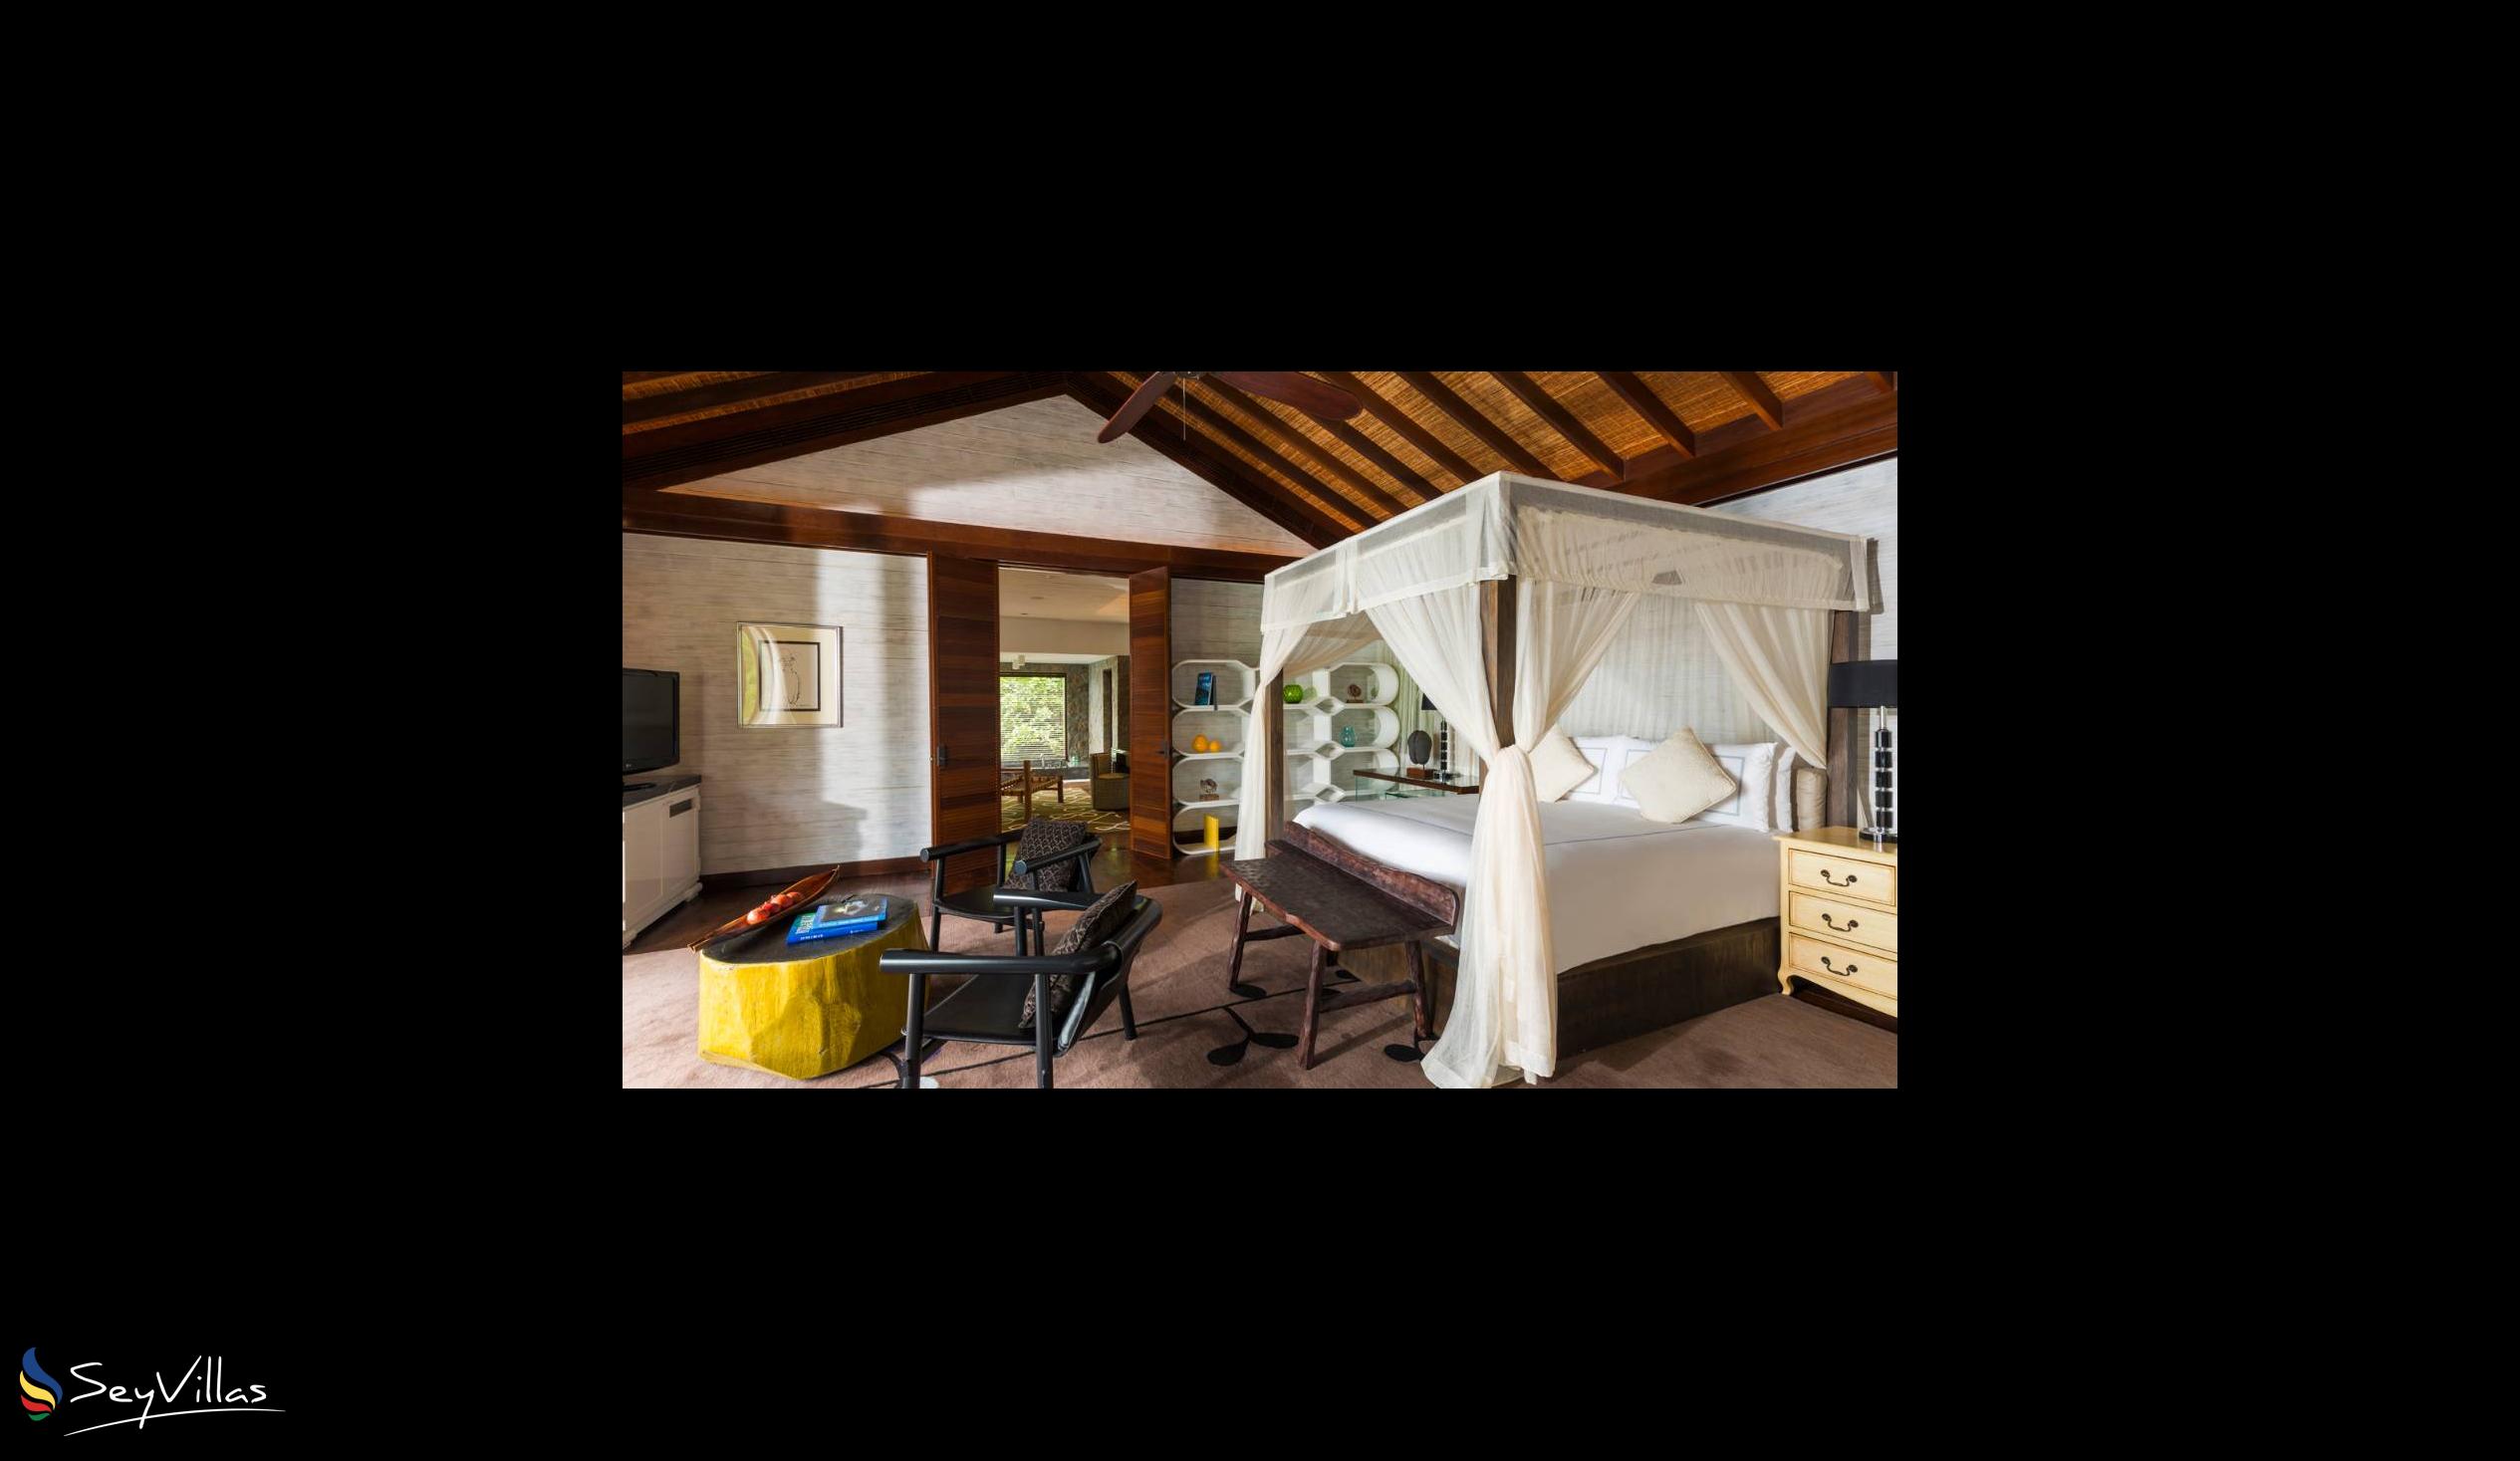 Photo 65: Four Seasons Resort - 4-Bedroom Residence Villa - Mahé (Seychelles)